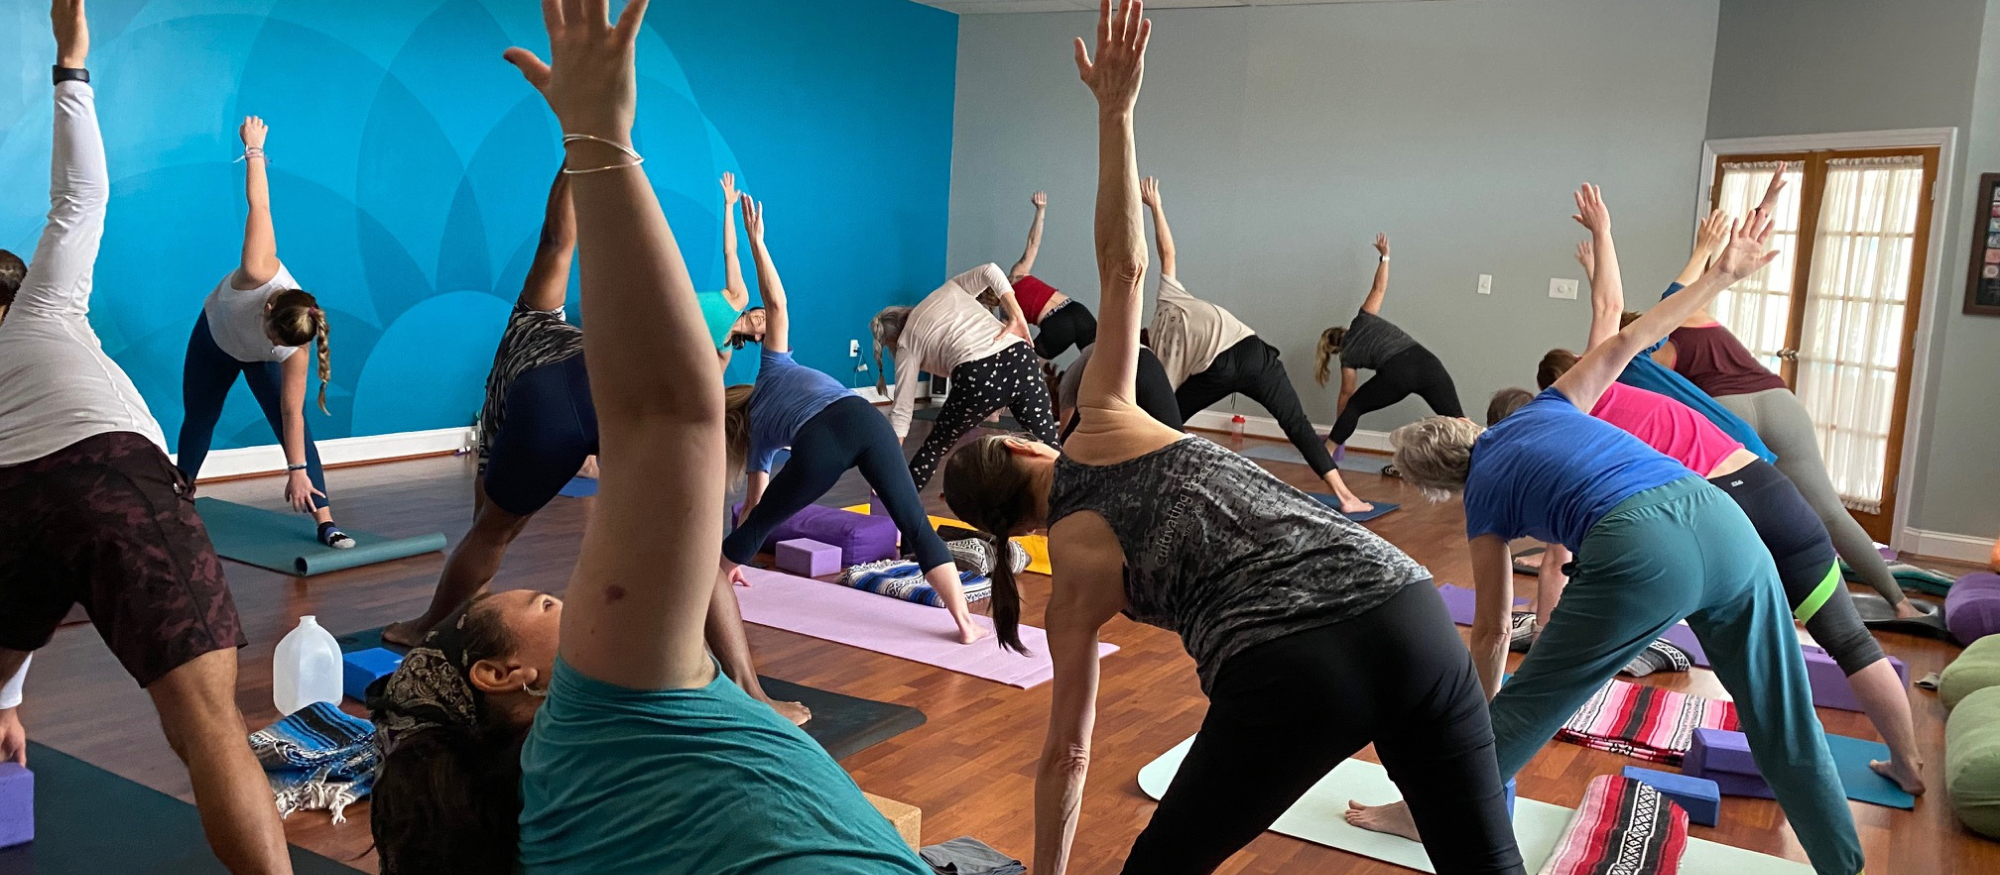 Weekly yoga class at Om Shanti Yoga in Burlington NC 